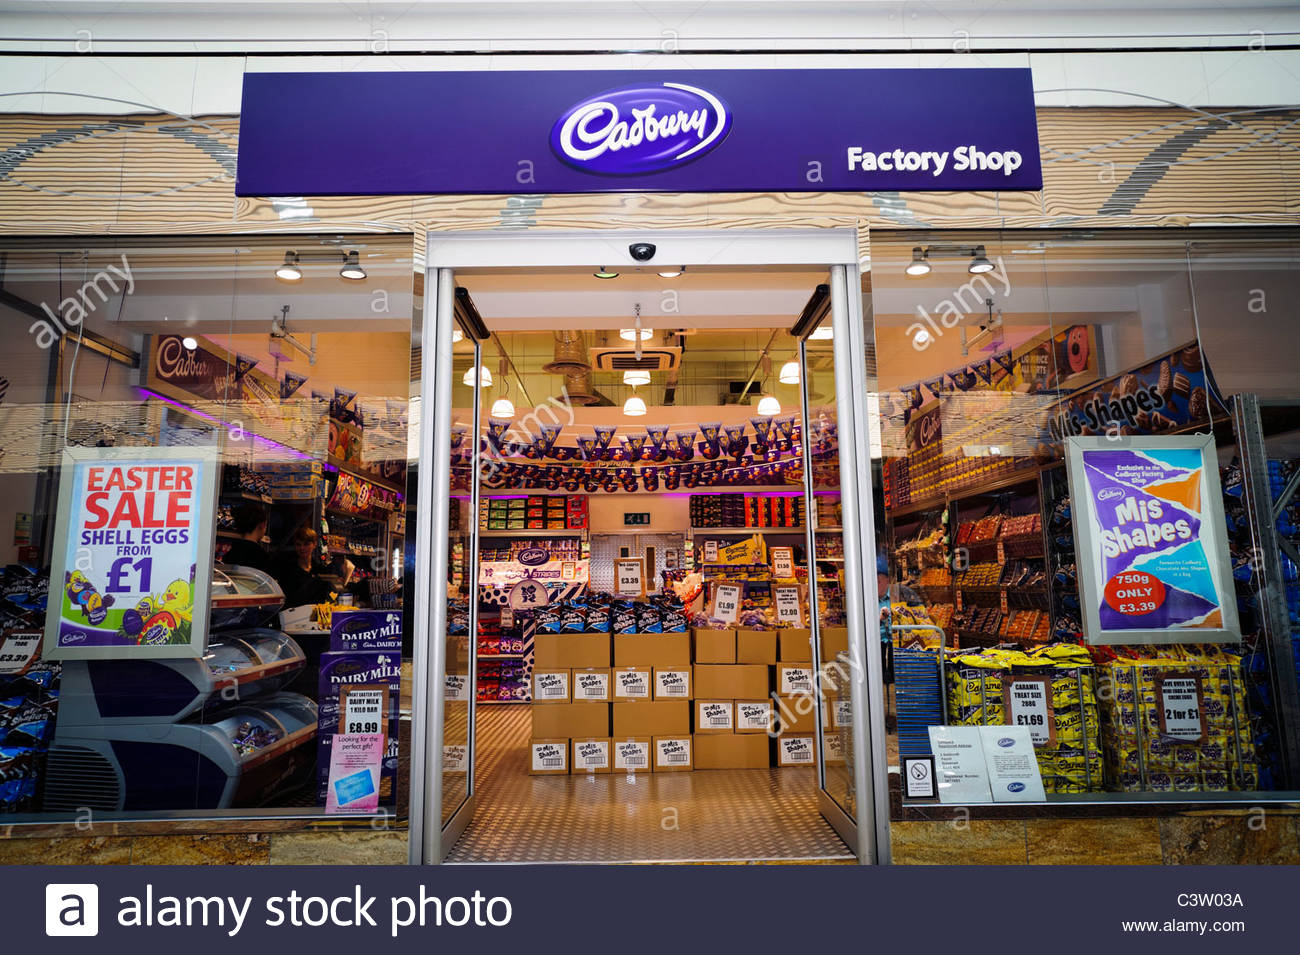 Cadbury factory shop Gloucester Quays, UK Stock Photo, Royalty Free Image: 36813598 - Alamy